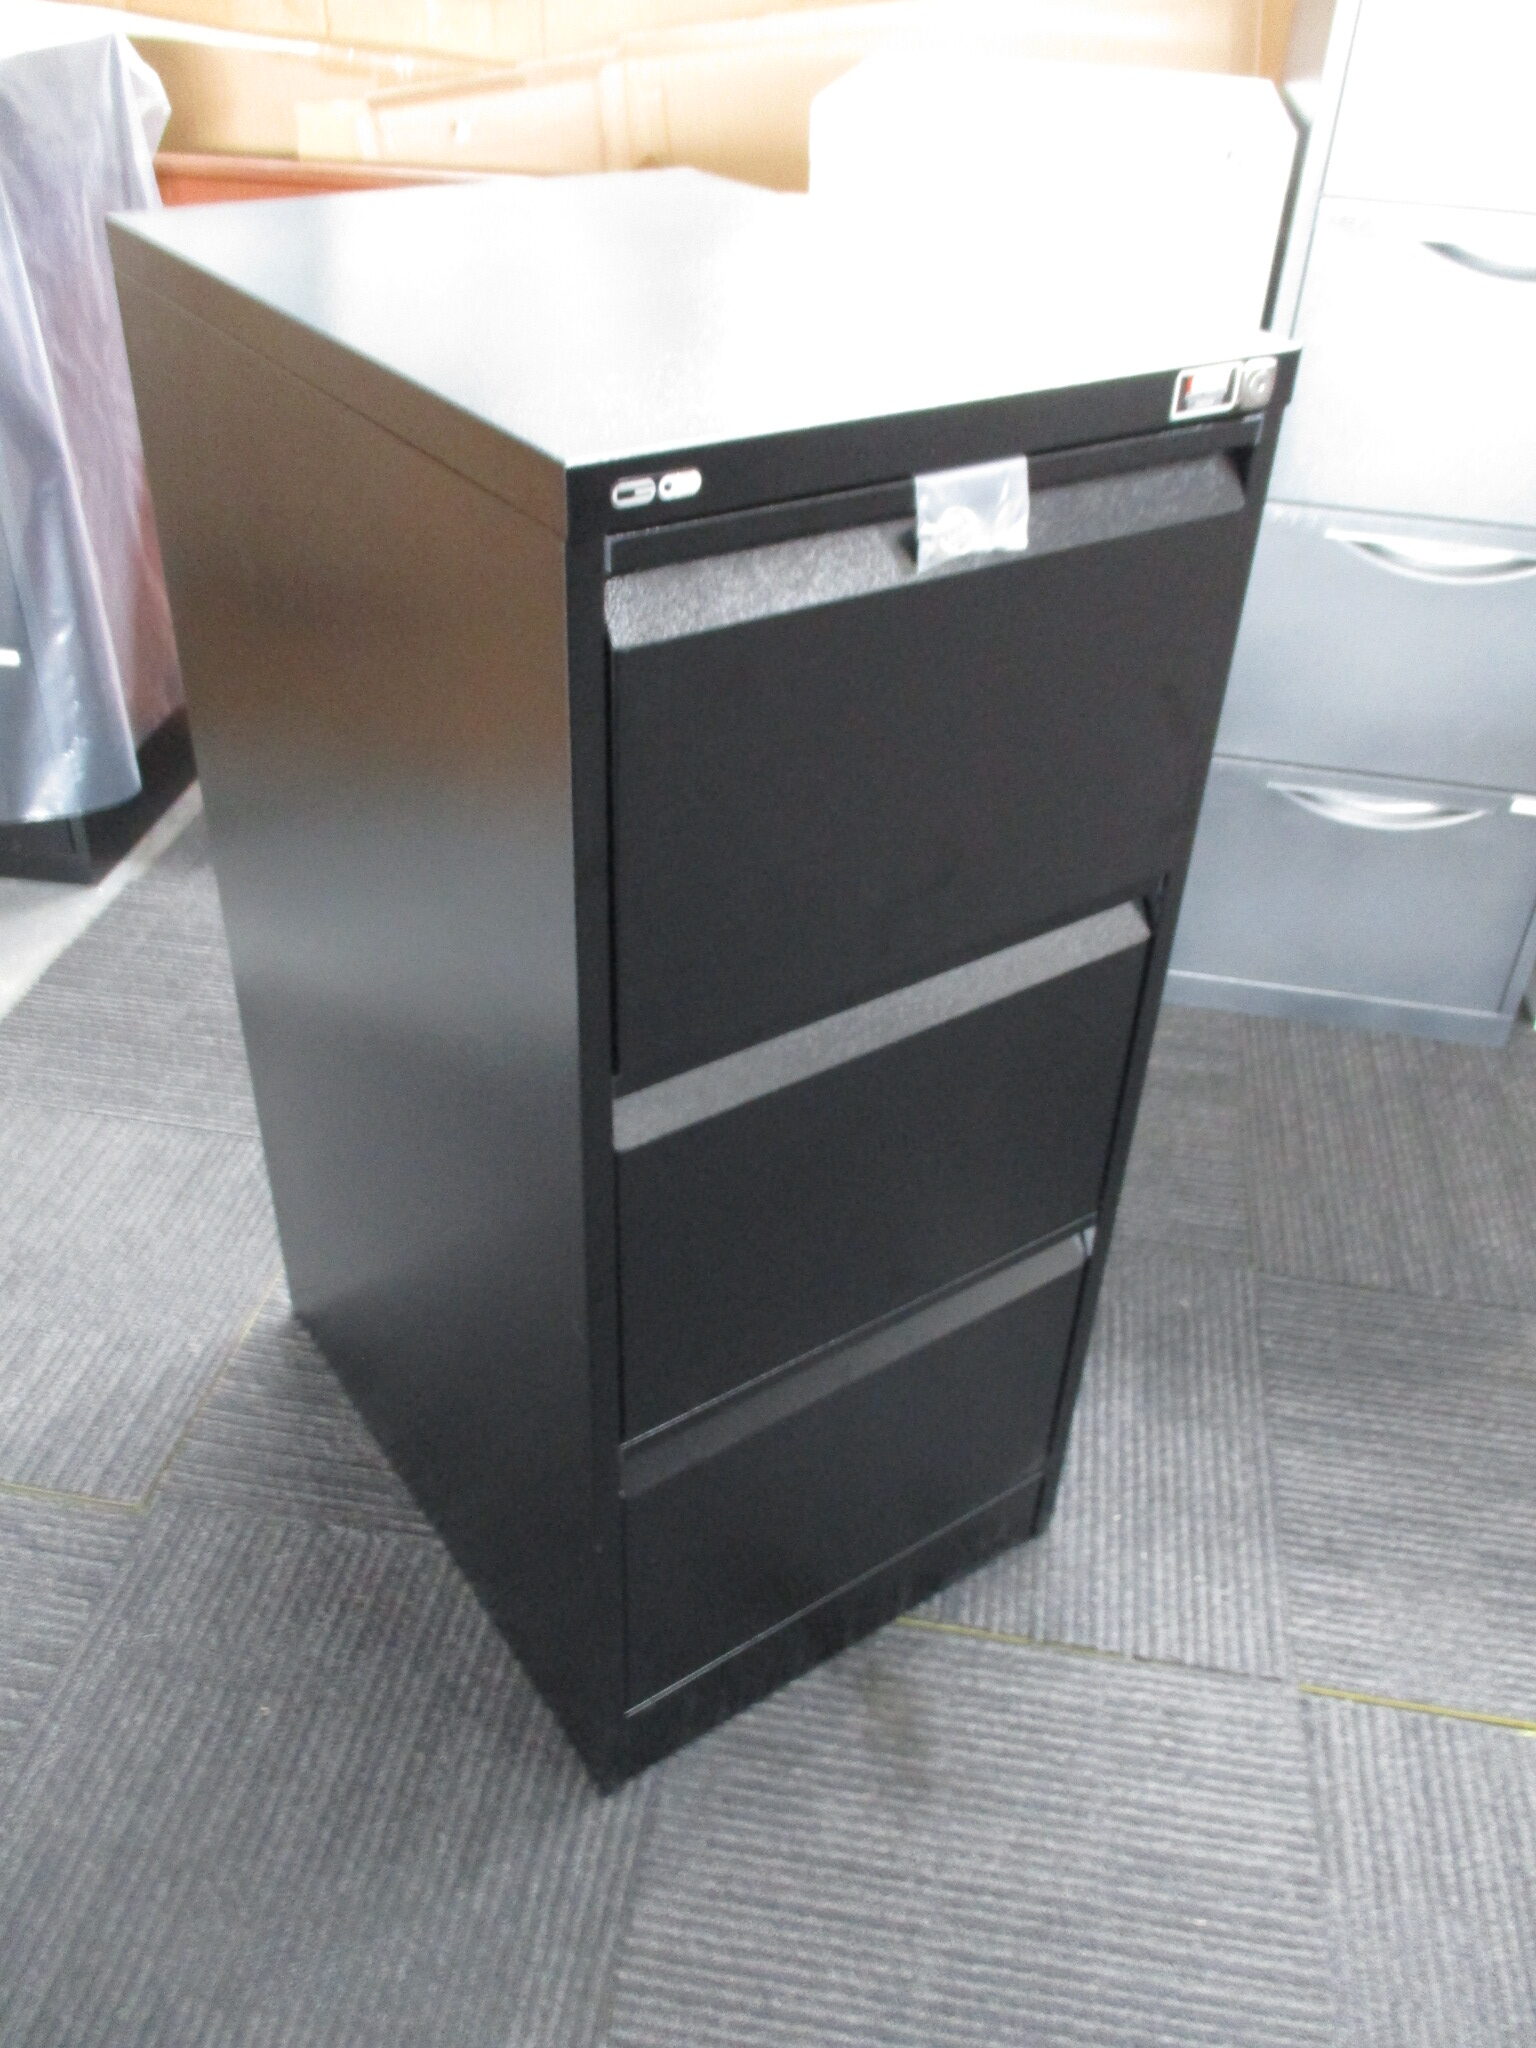 New GO Black 3 Drawer Filing Cabinet $290